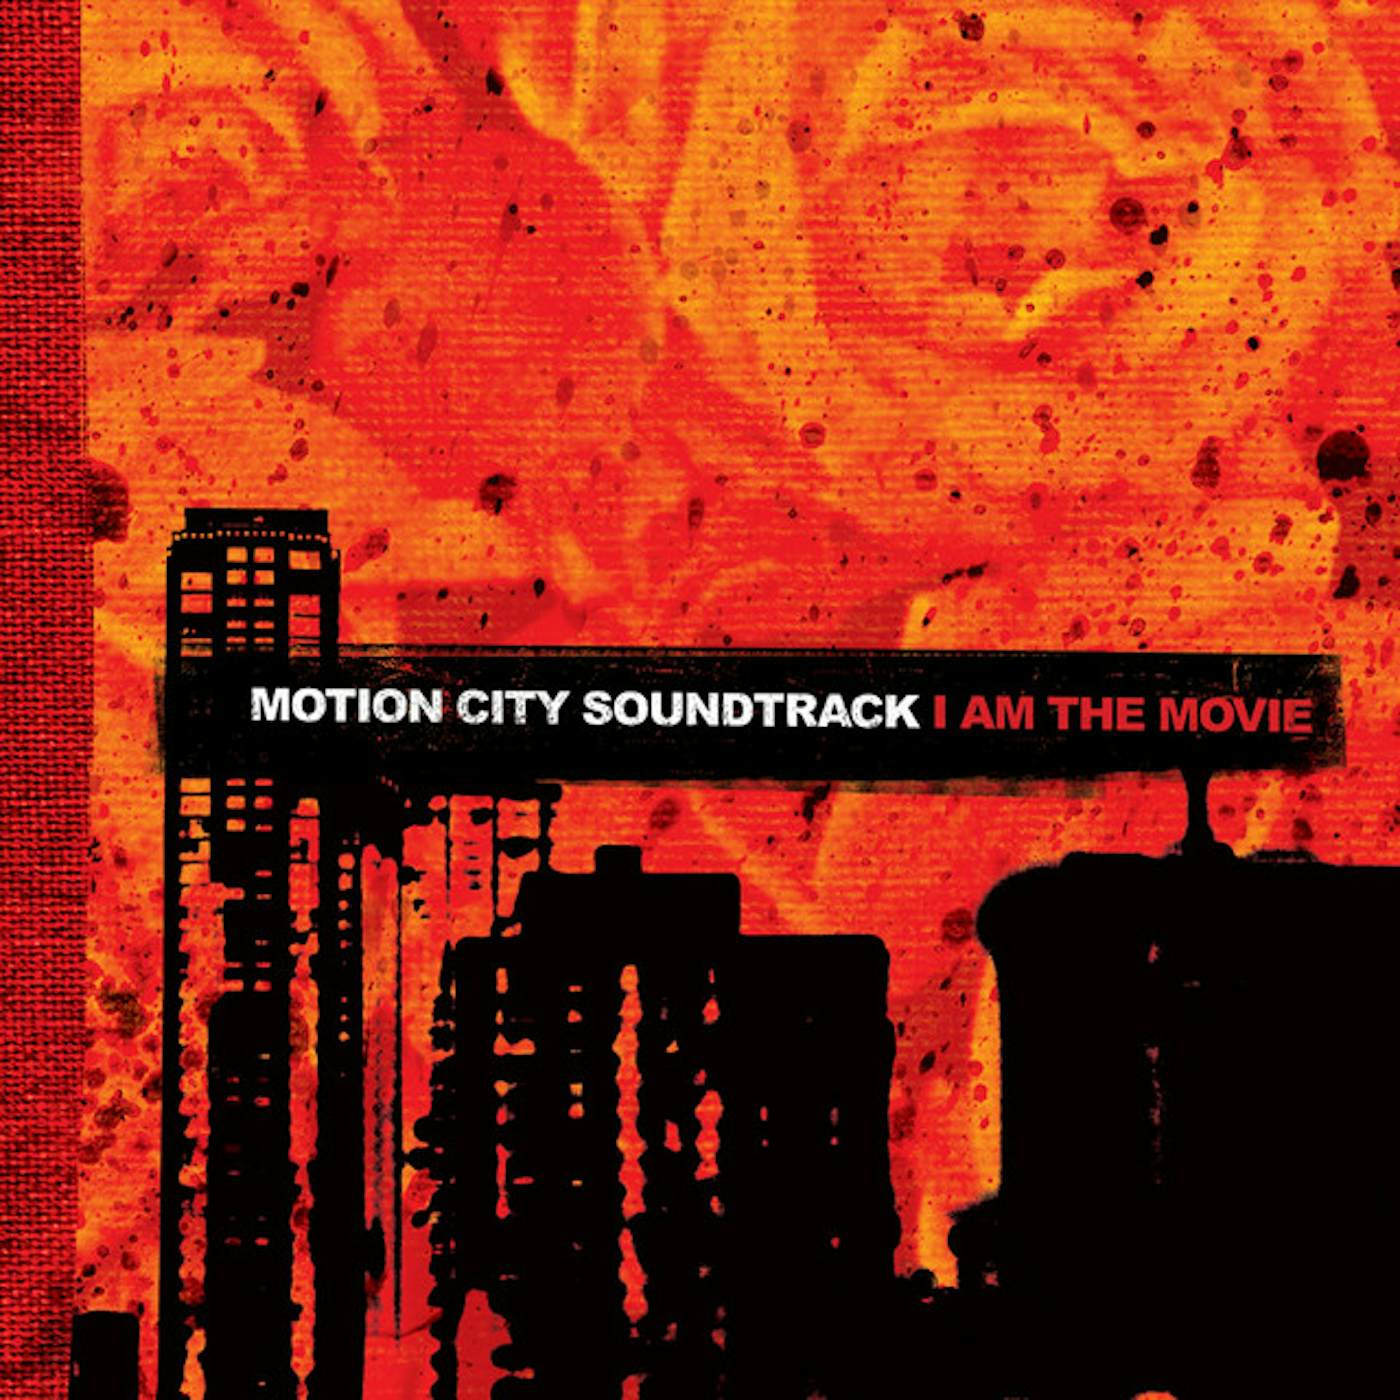 Motion City Soundtrack I Am The Movie (Anniversary Edition/Tangerine) Vinyl Record